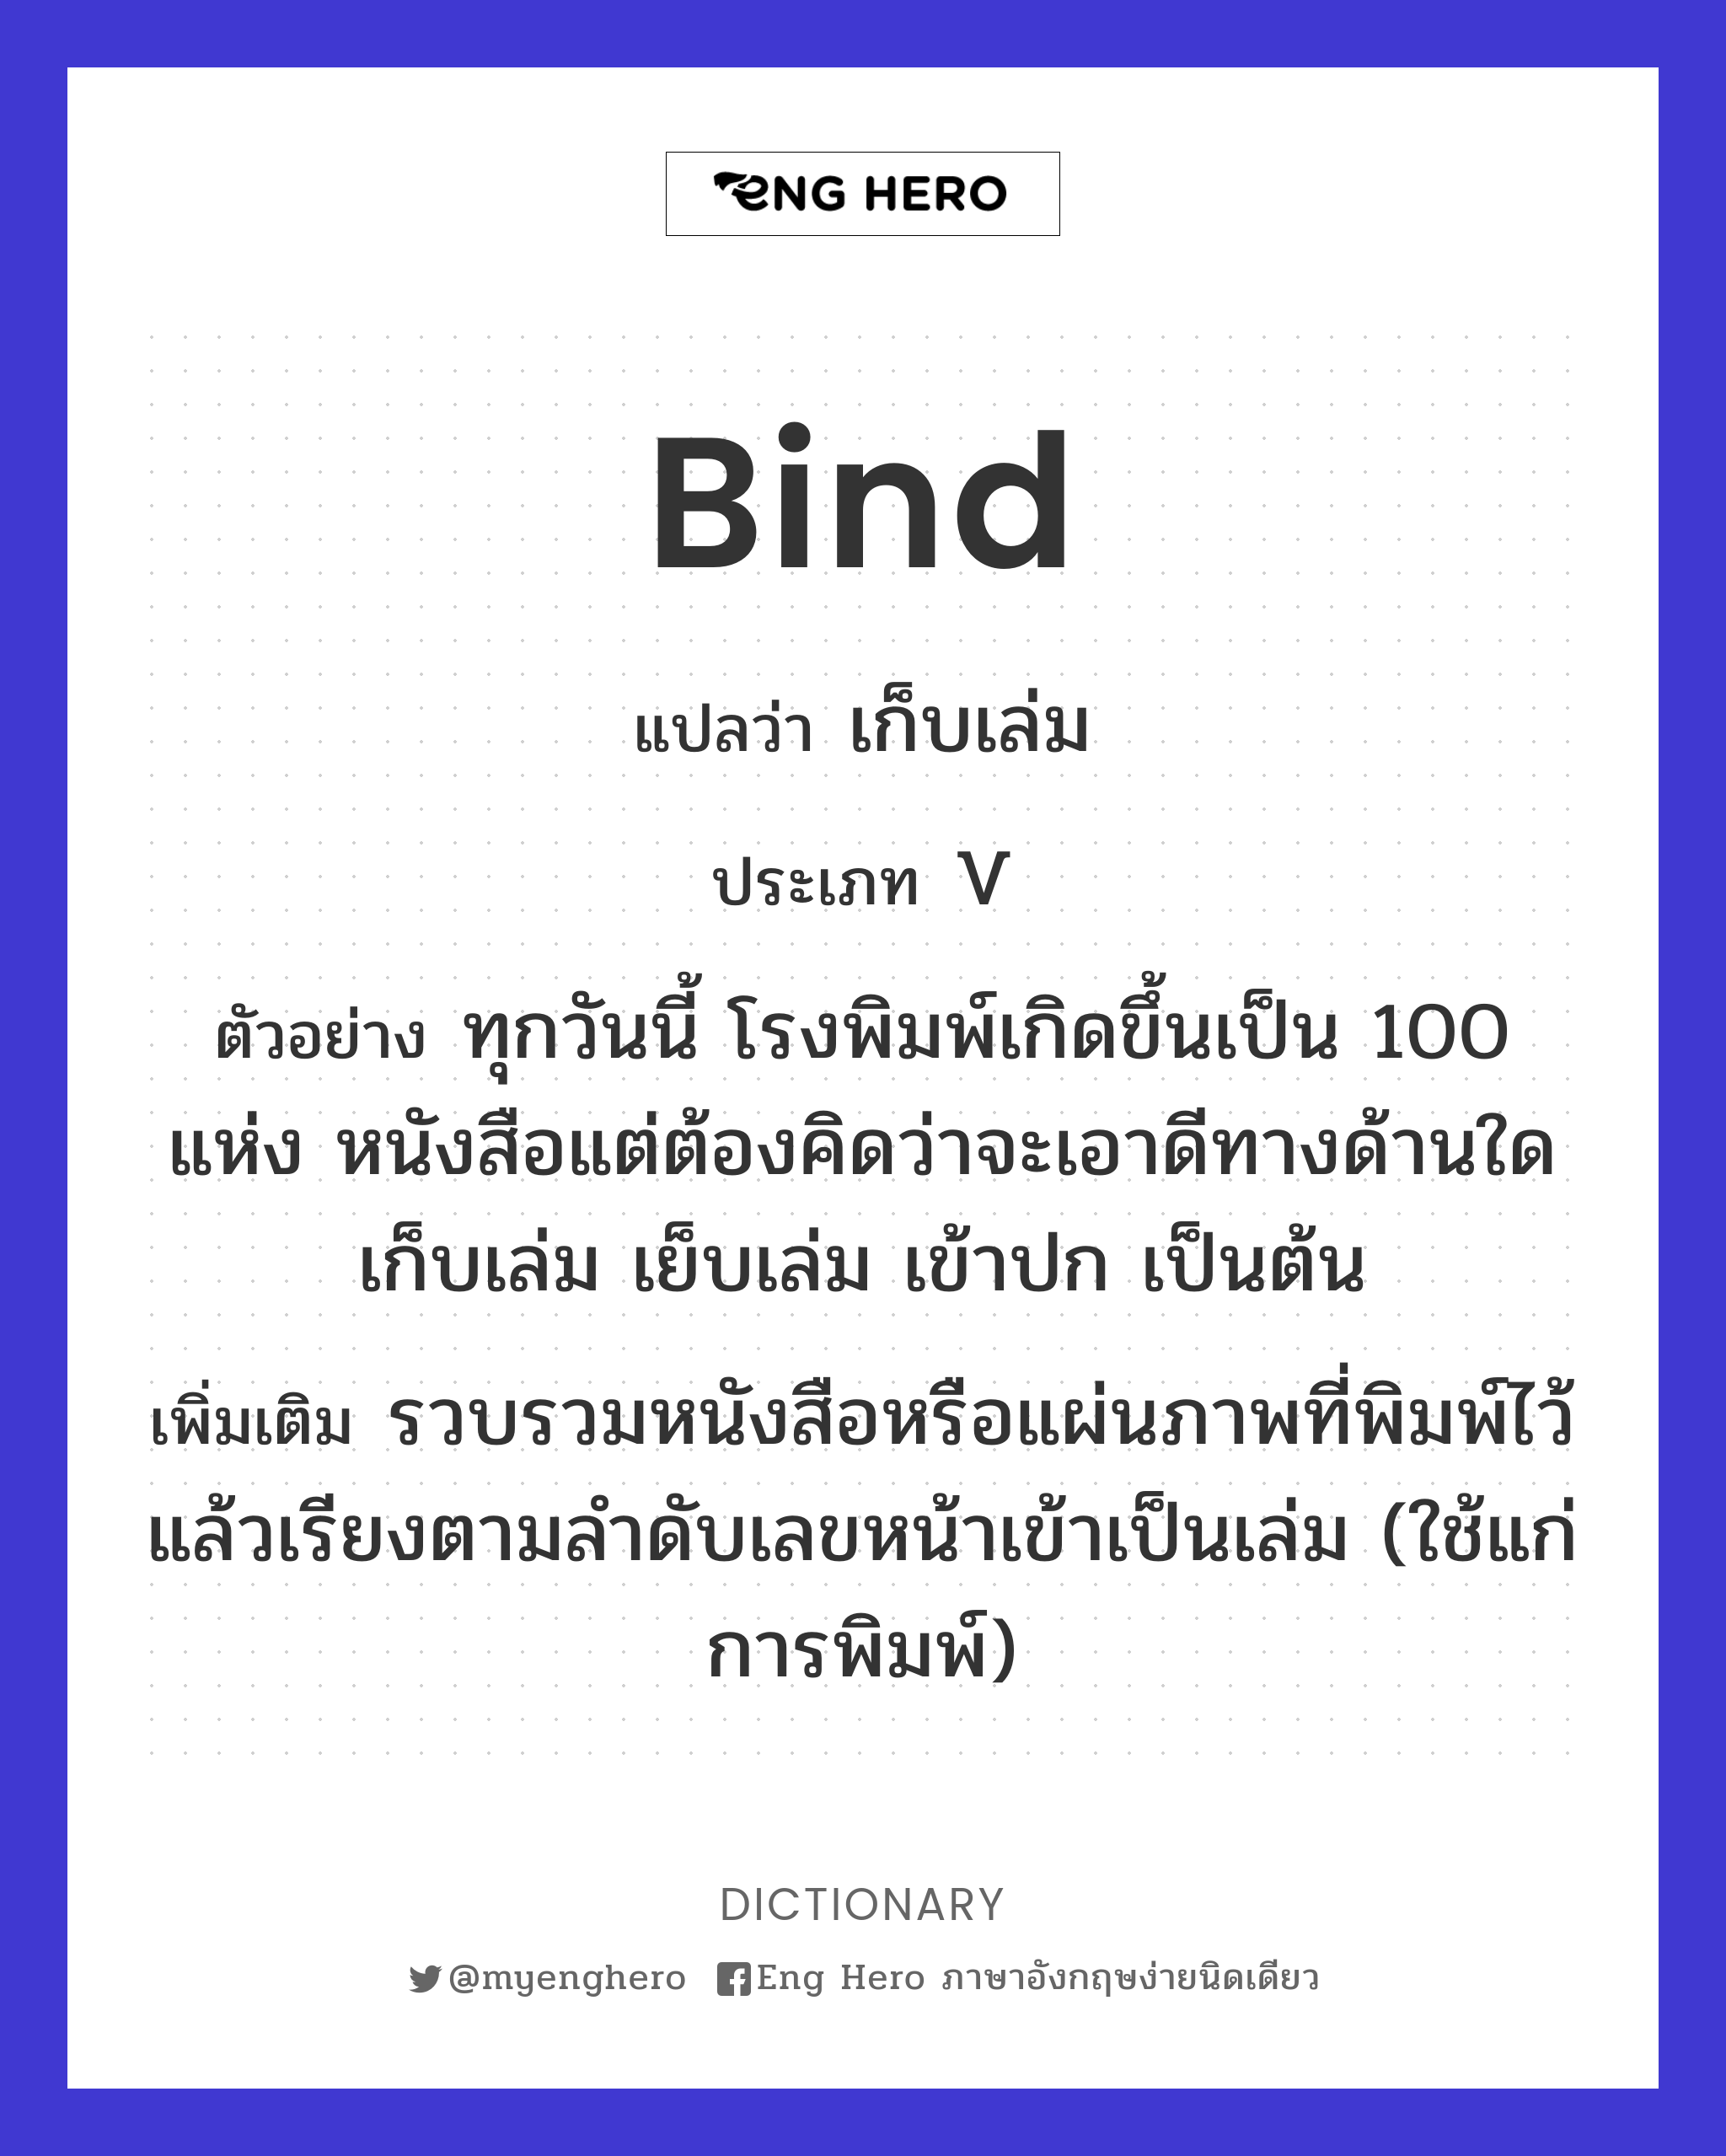 bind